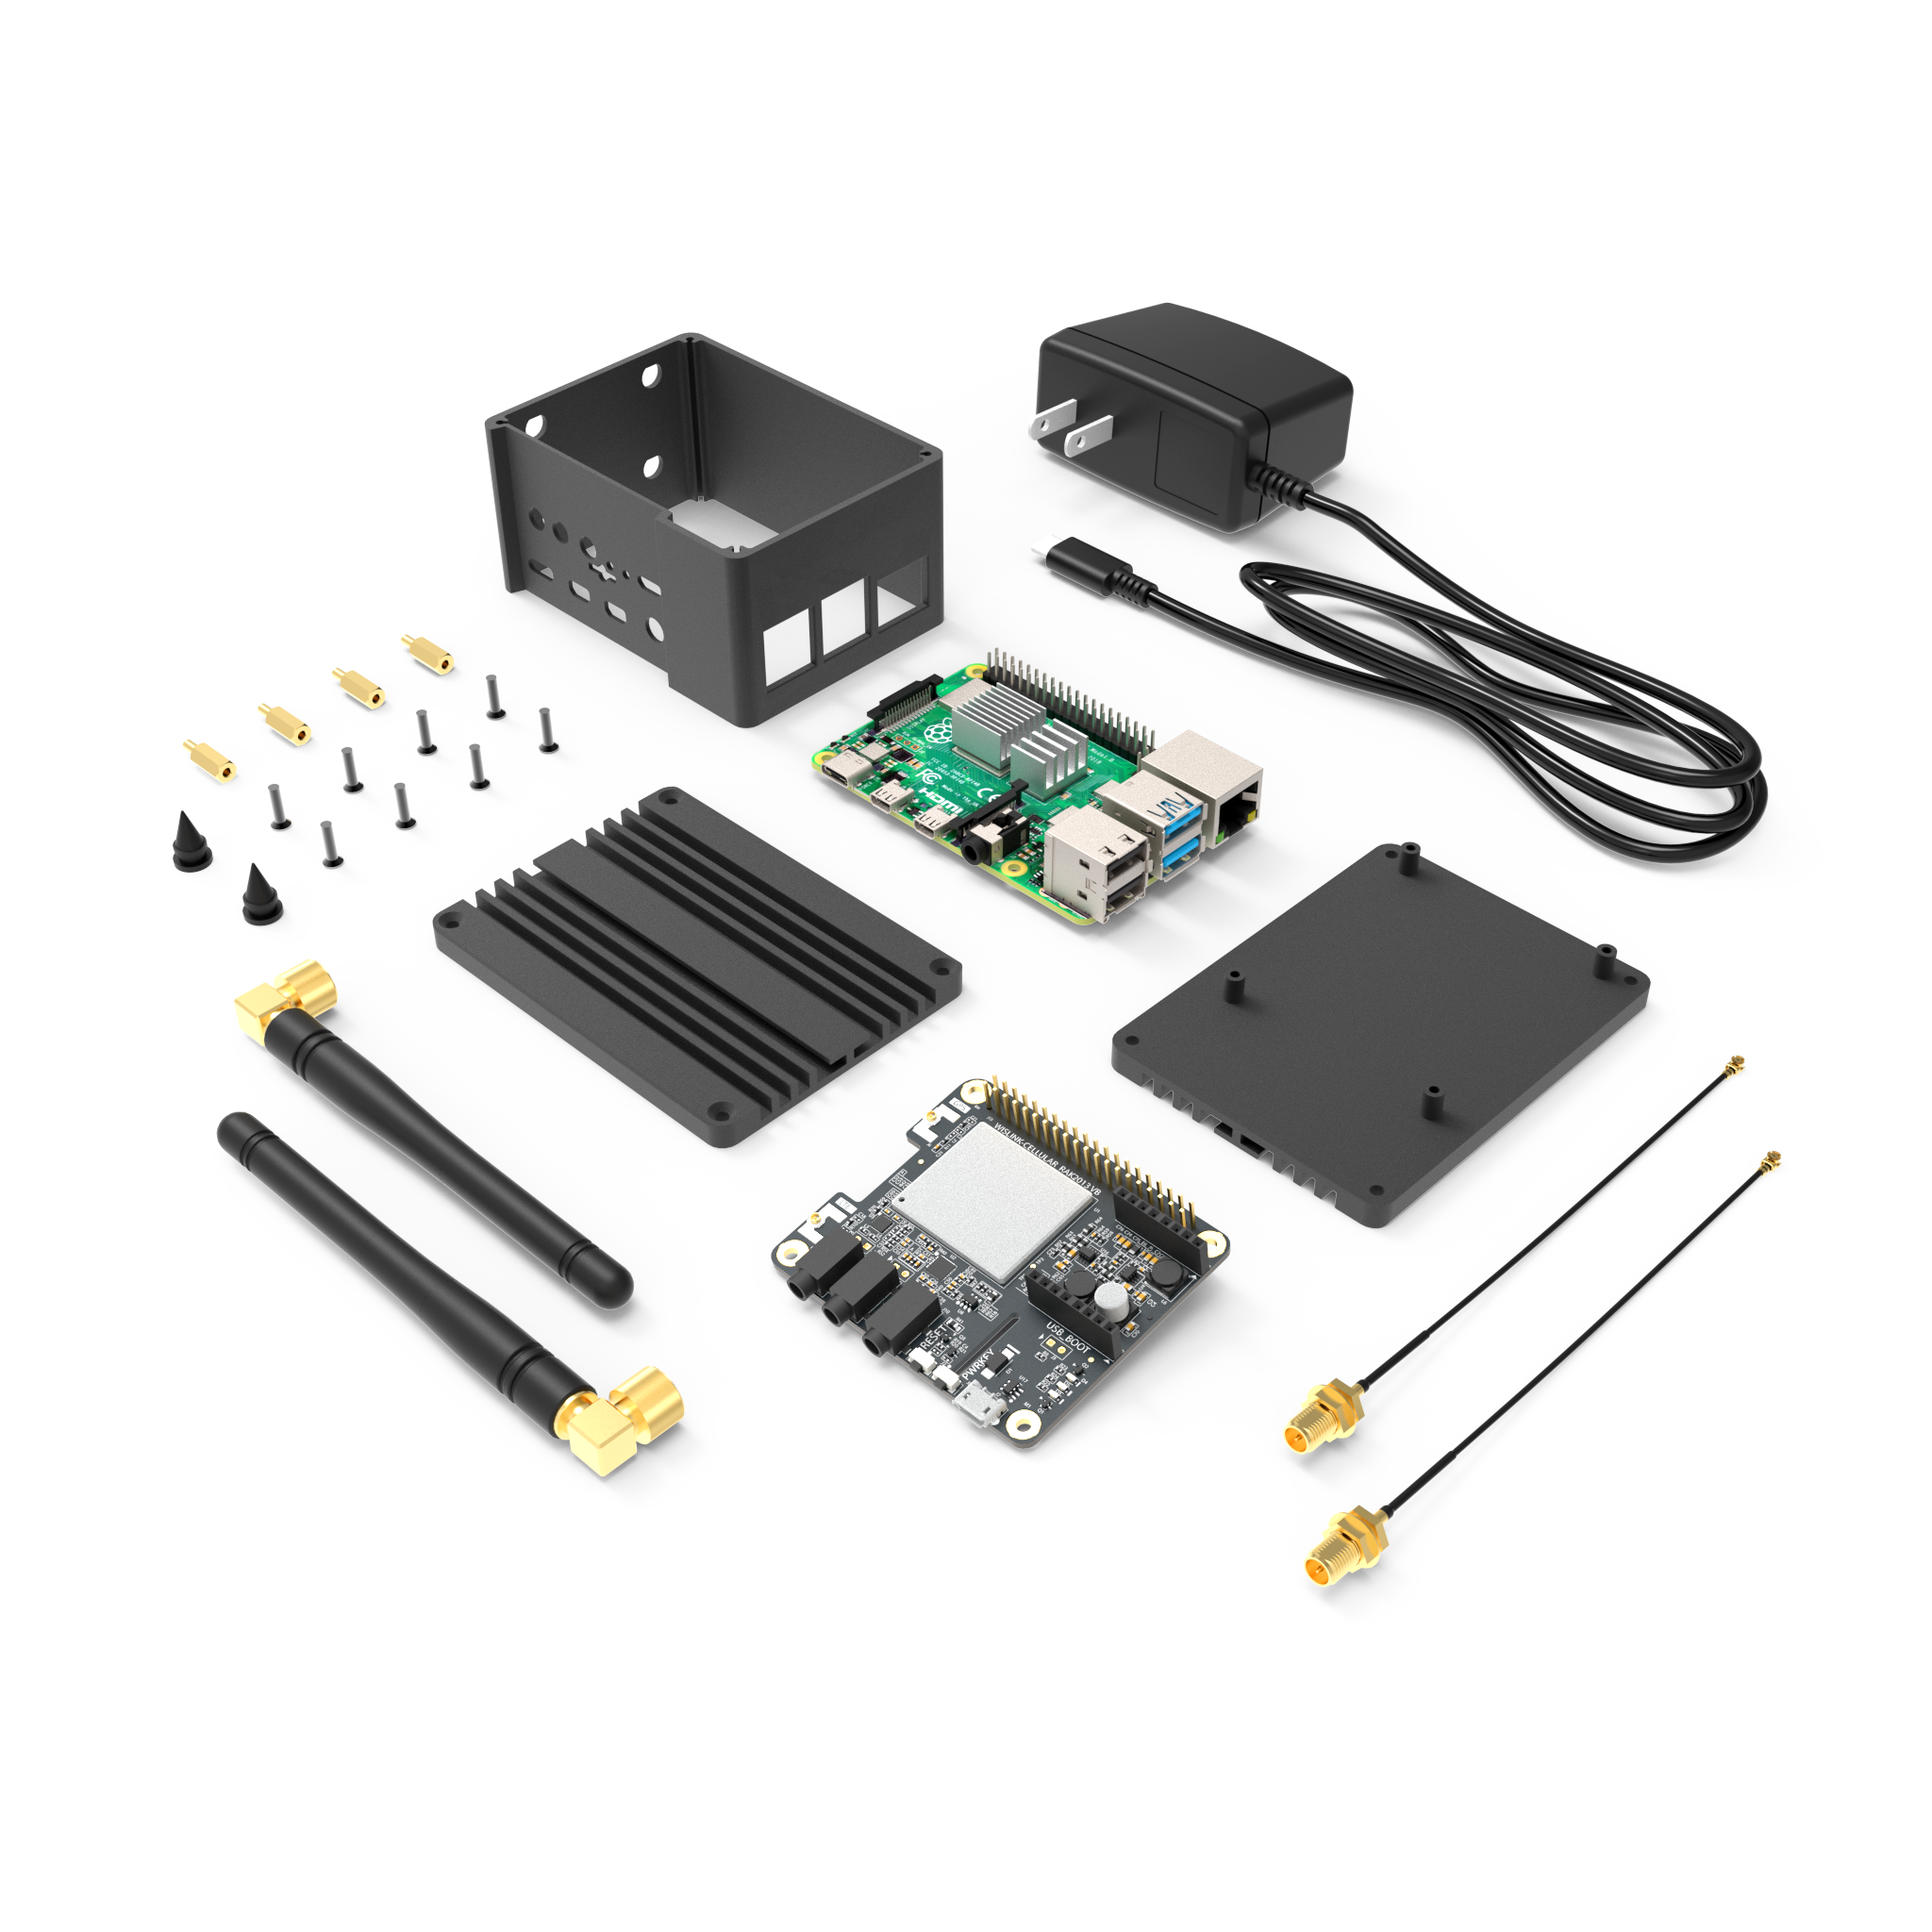 RAK Raspberry Pi 4 Kit for LTE-M/NB-IoT/LTE